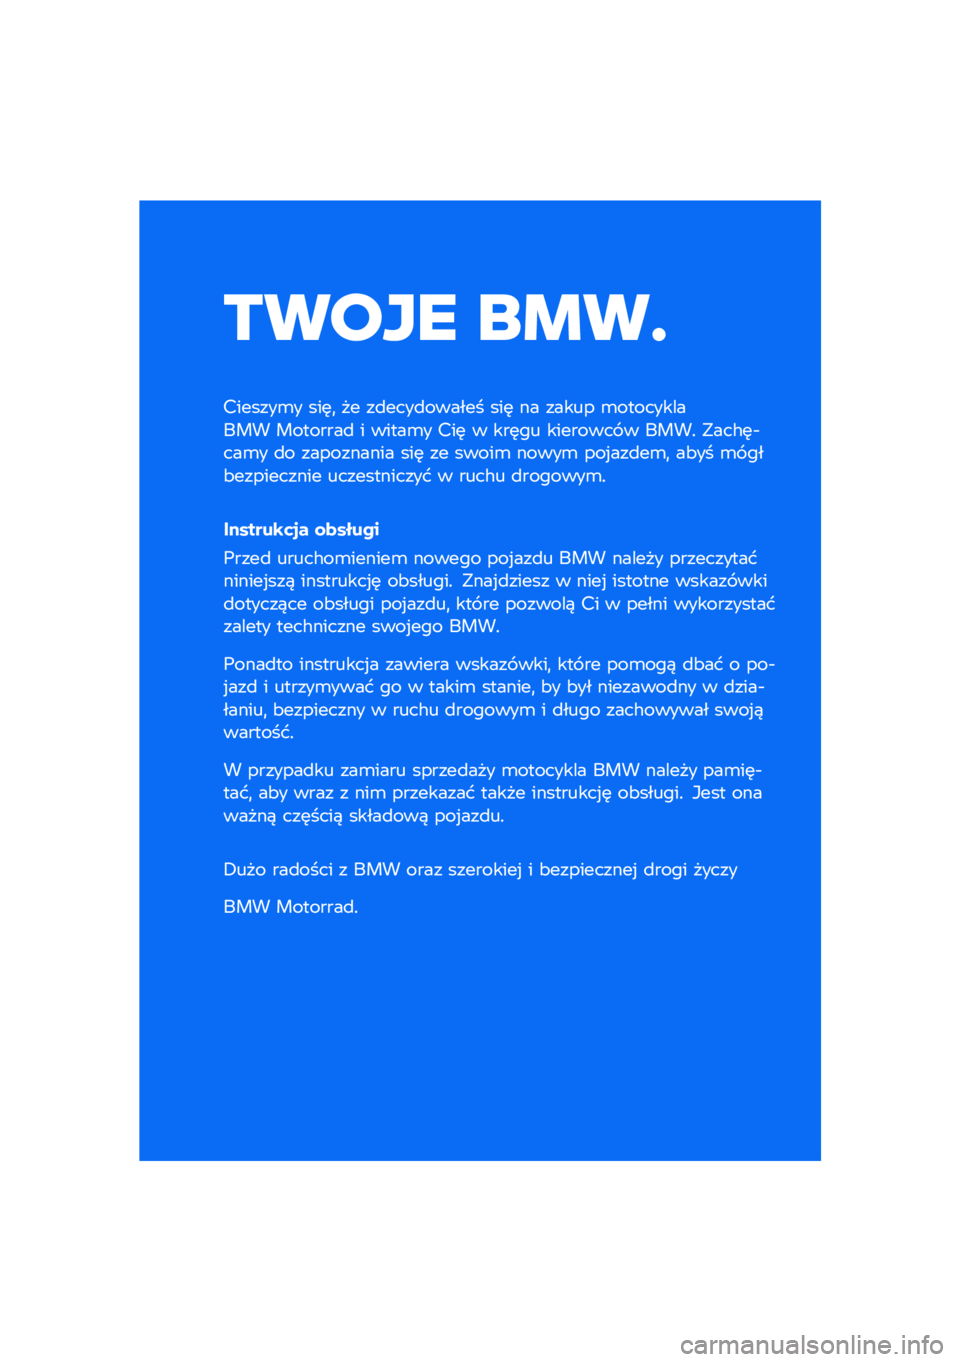 BMW MOTORRAD F 850 GS 2021  Instrukcja obsługi (in Polish) ����� ��\b��	
�������\b� ���	�
 �� ��
����
������ ���	 �� ����� �\b����������� ��������
 � �����\b� ���	 � ���	�� �������� �